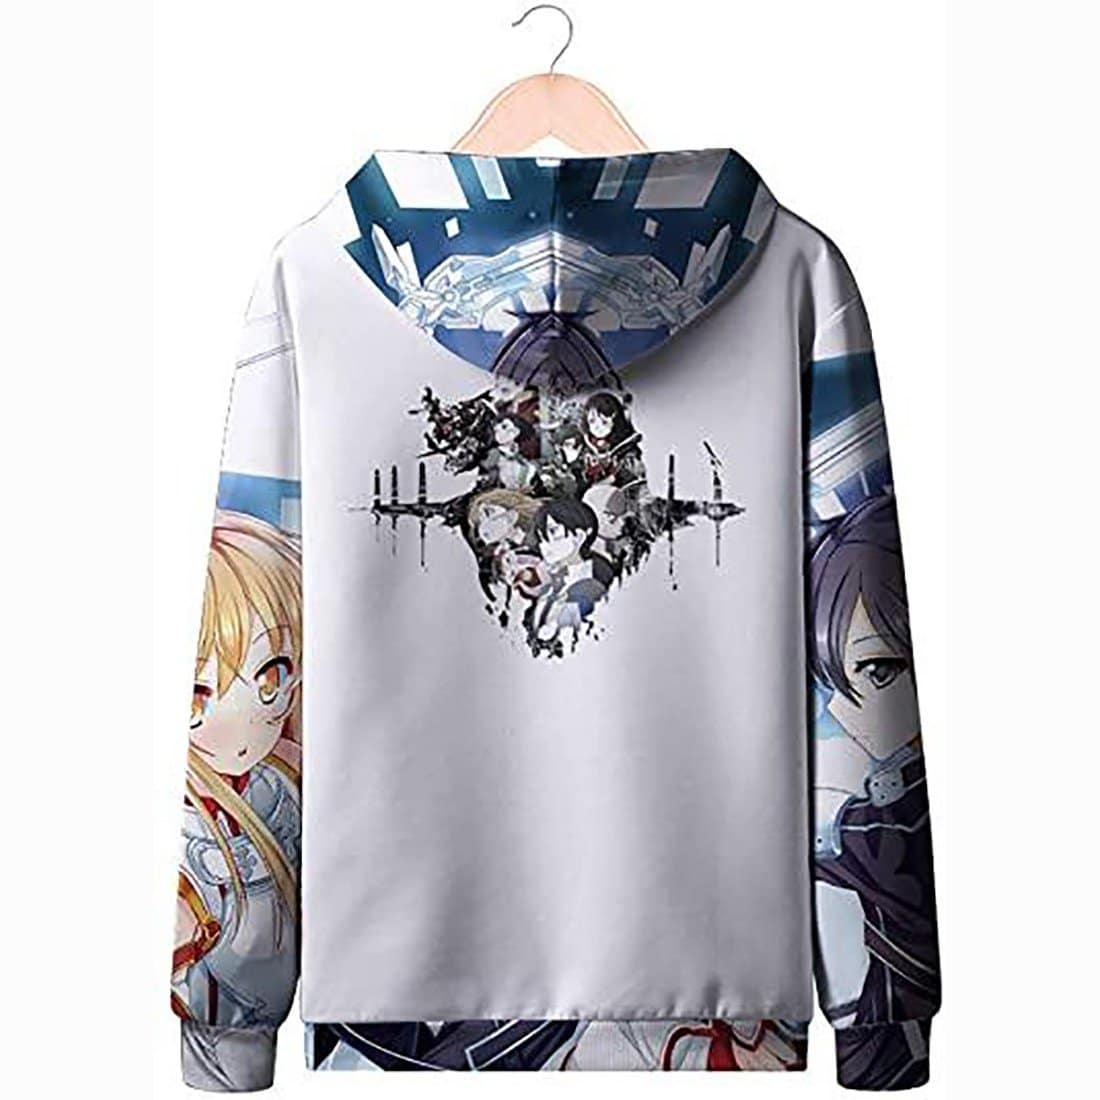 Unisex Adult 3D Printed Anime Sword Art Online Cosplay Casual Zip Up Jackets Coat Hoodie Sweatshirt Tops